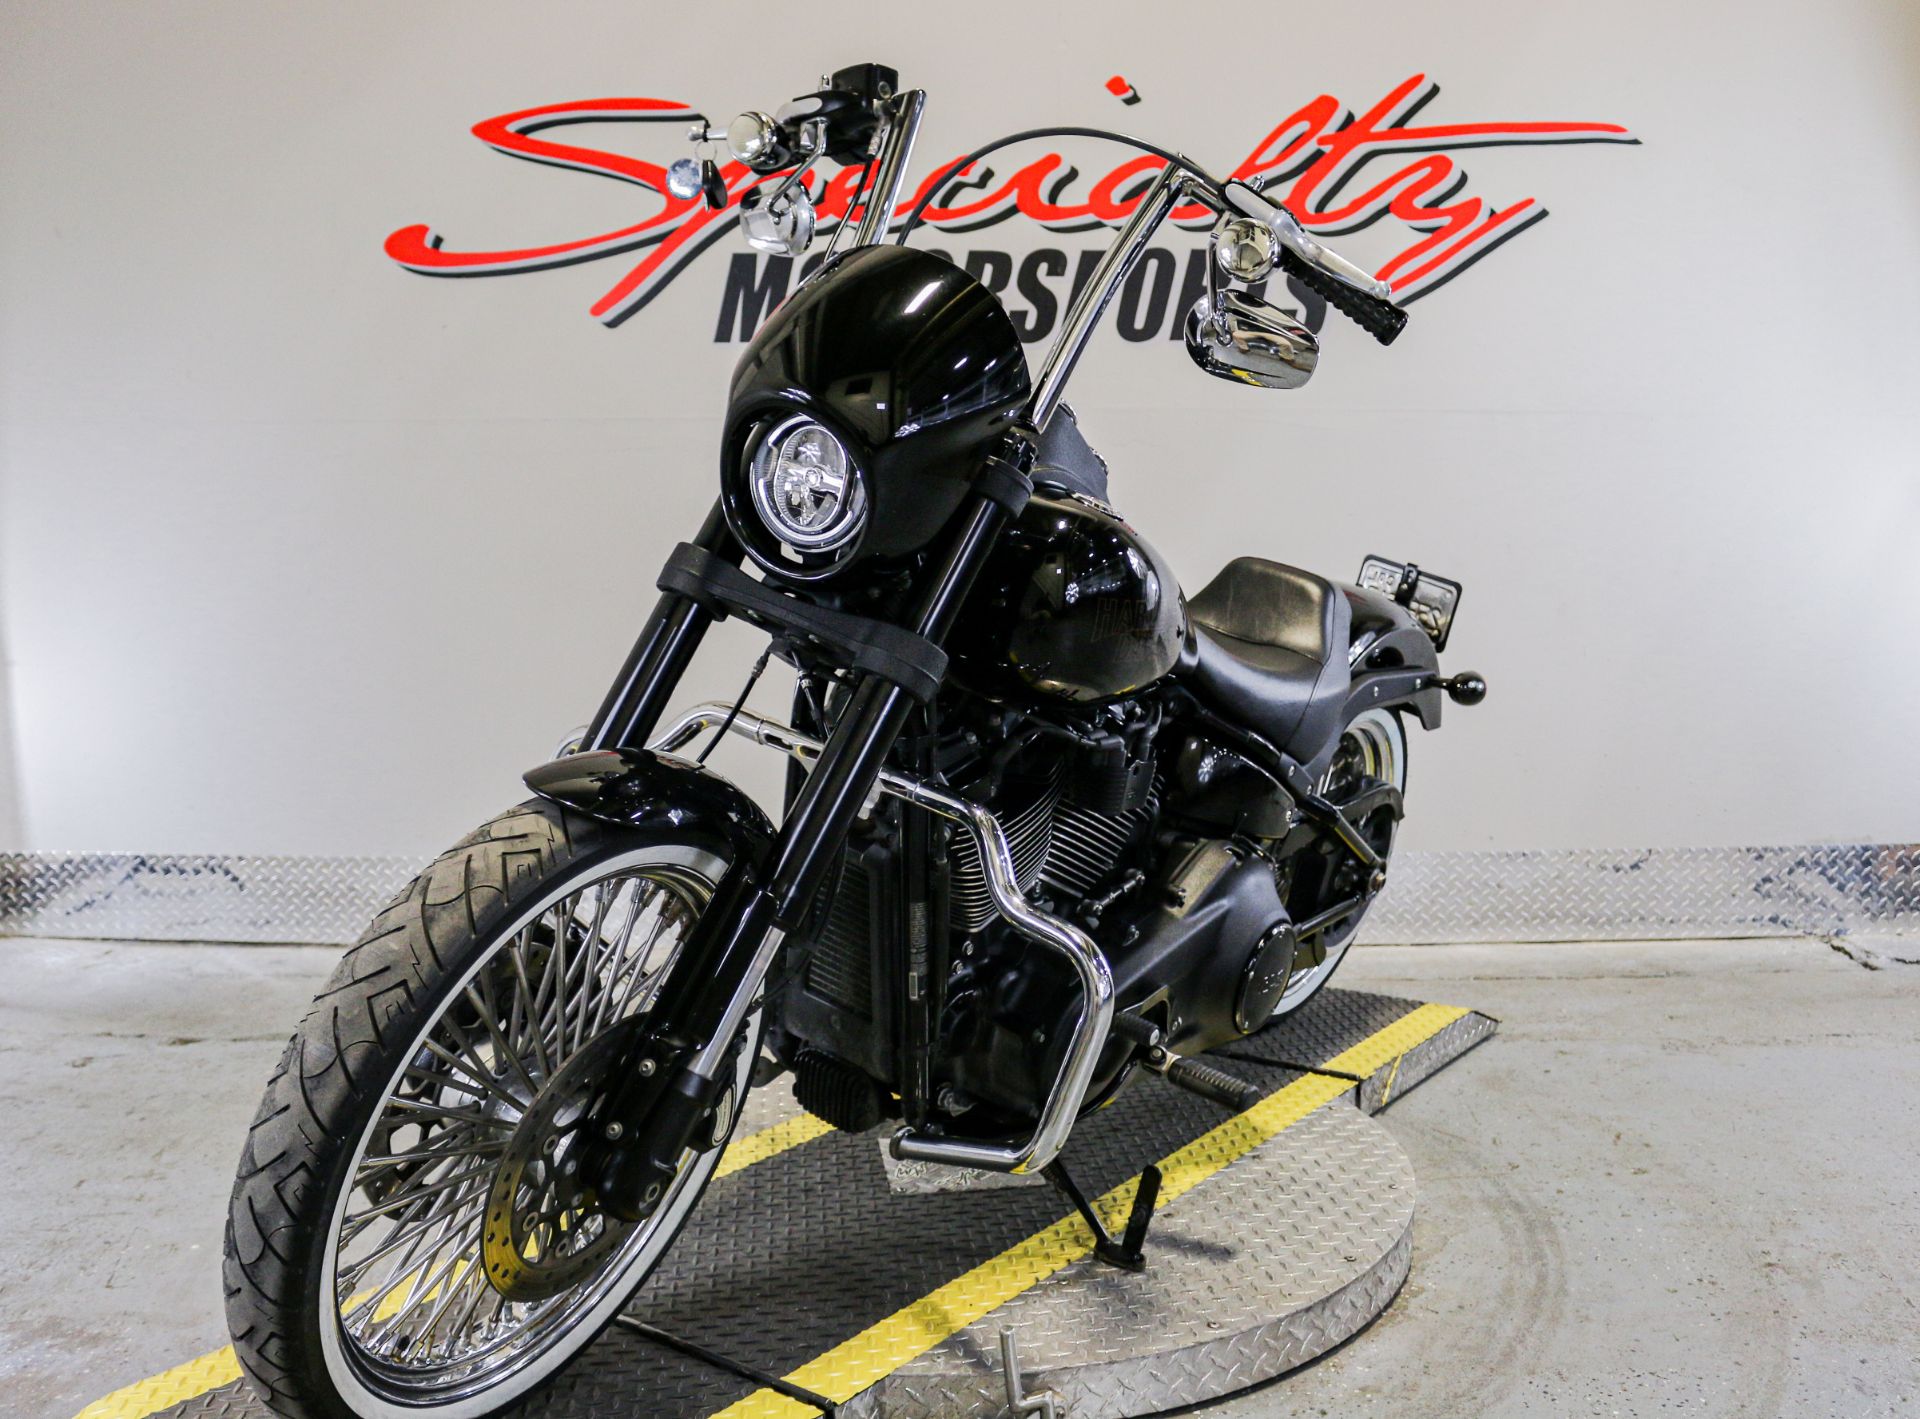 2021 Harley-Davidson Low Rider®S in Sacramento, California - Photo 5